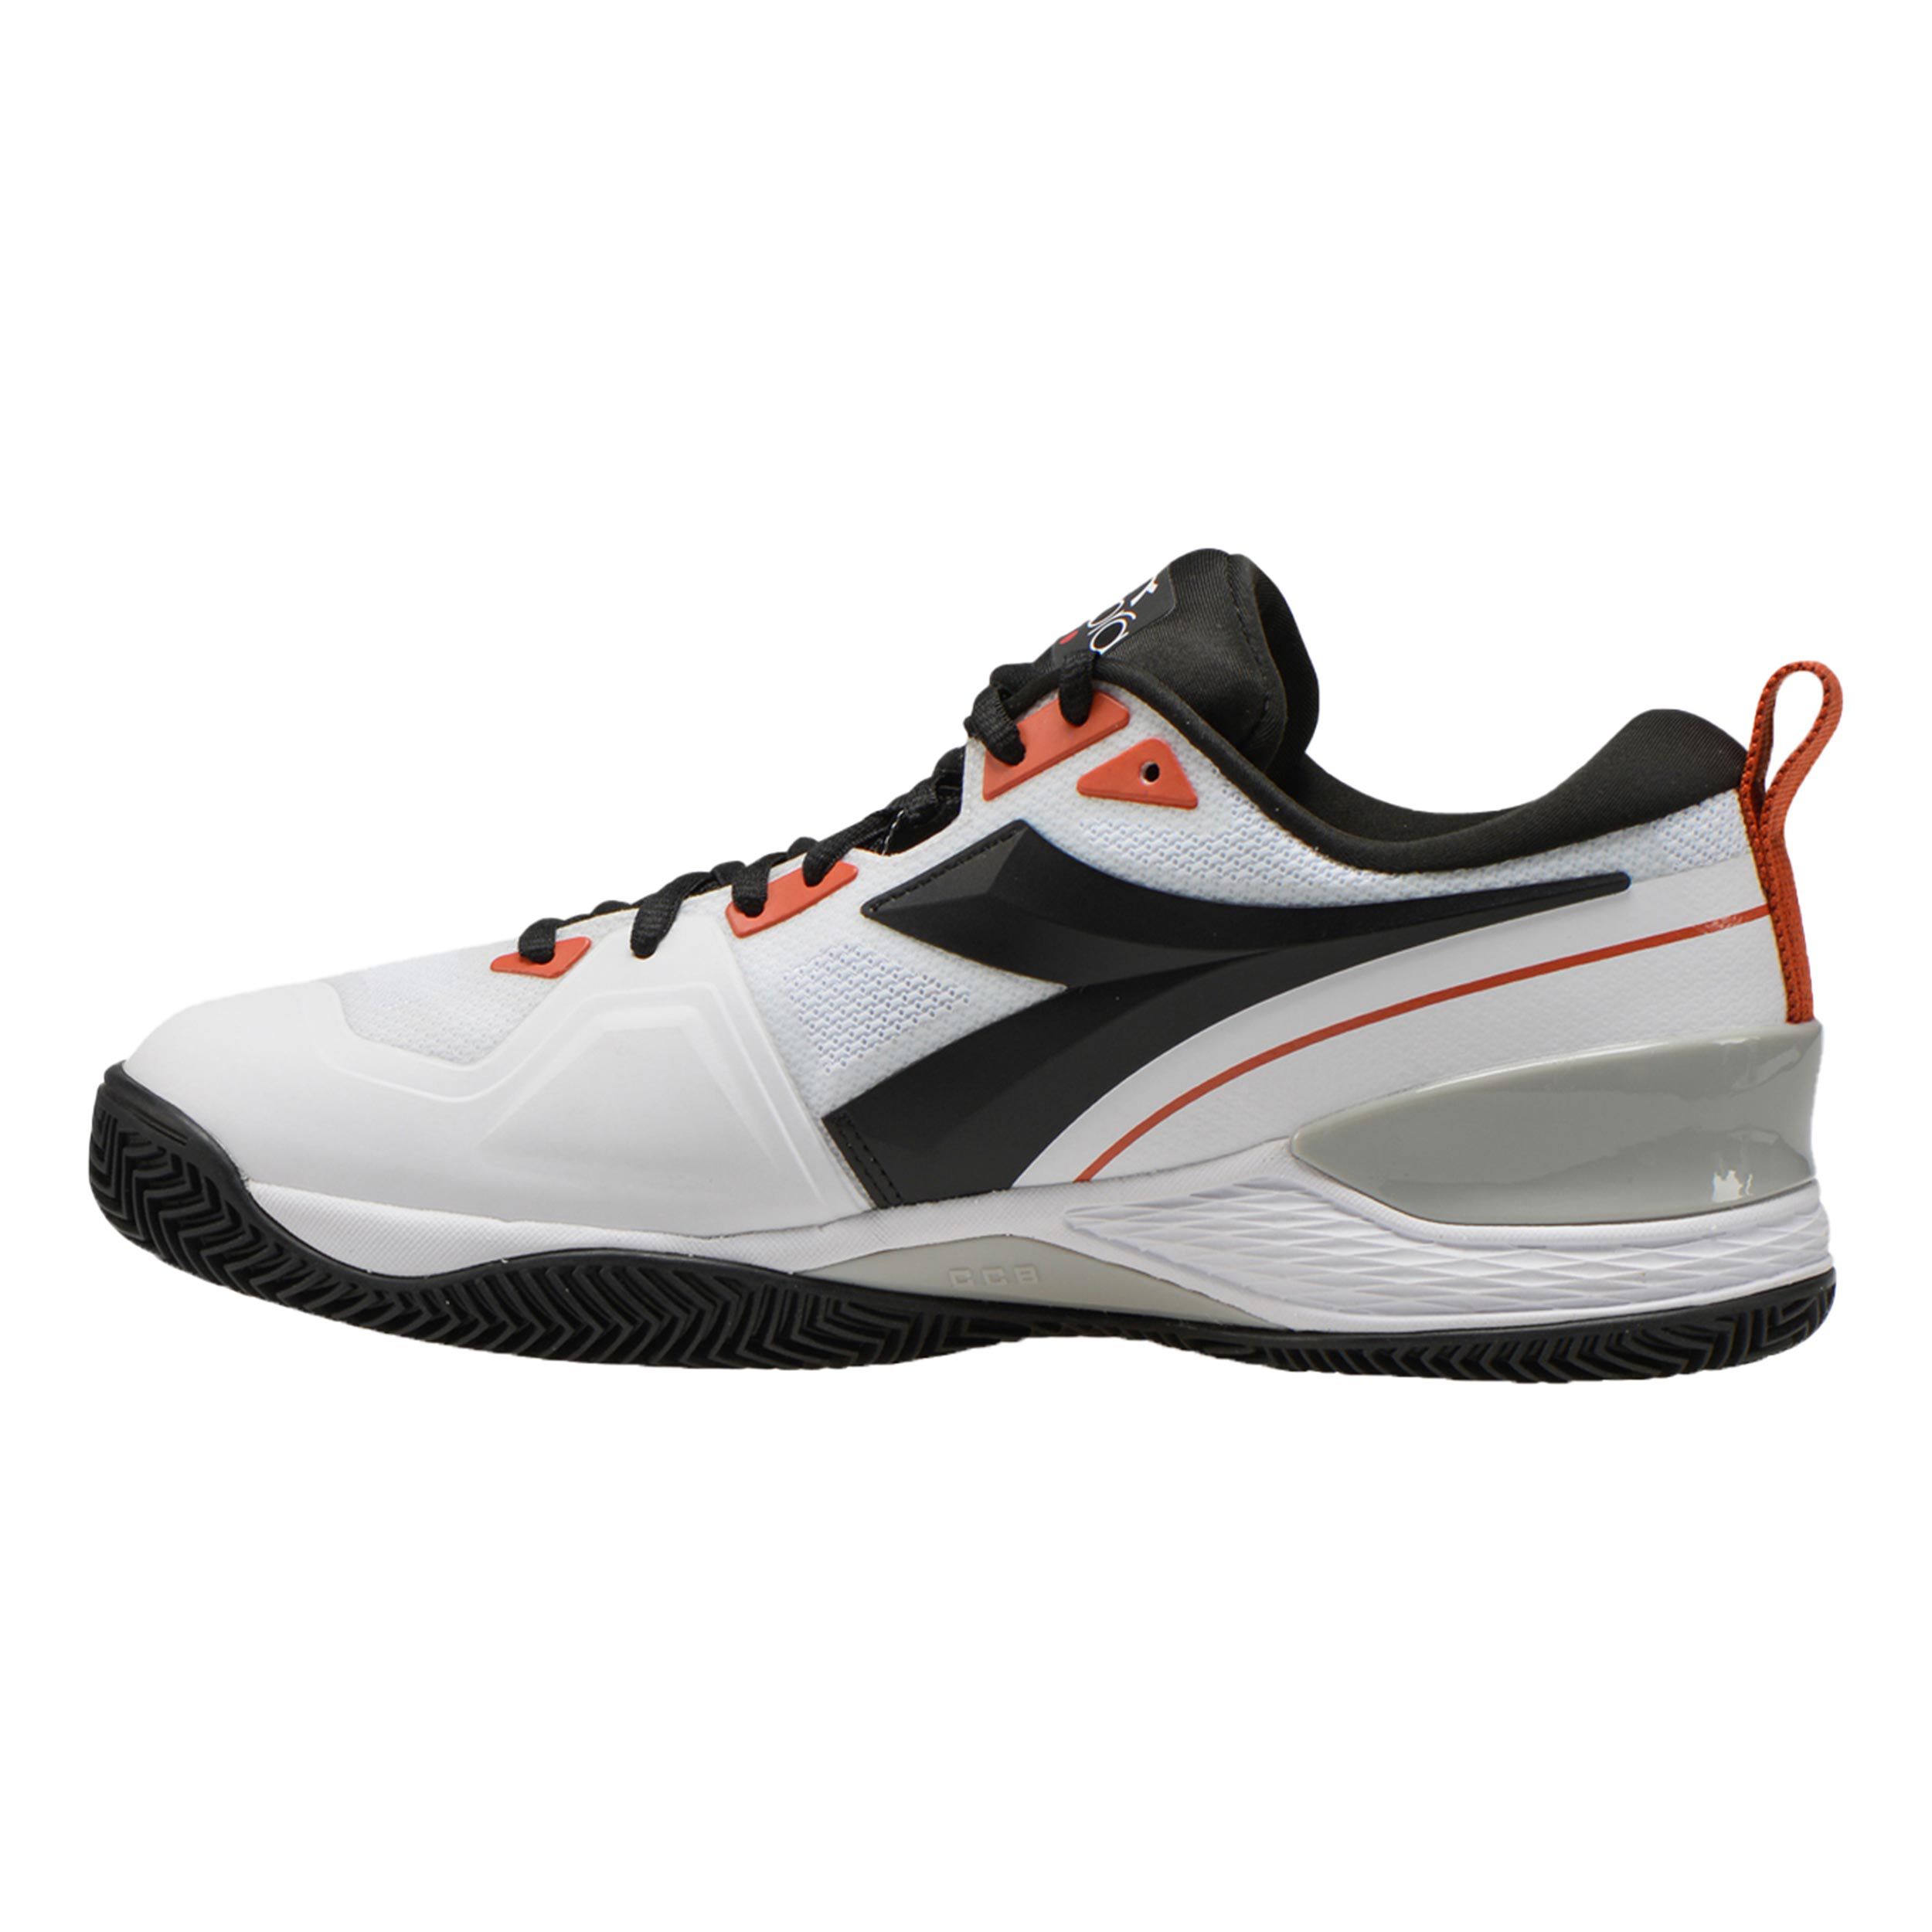 Gris Diadora Hommes Speed Blushield 2 Clay Chaussures De Tennis Chaussure Terre Battue Noir